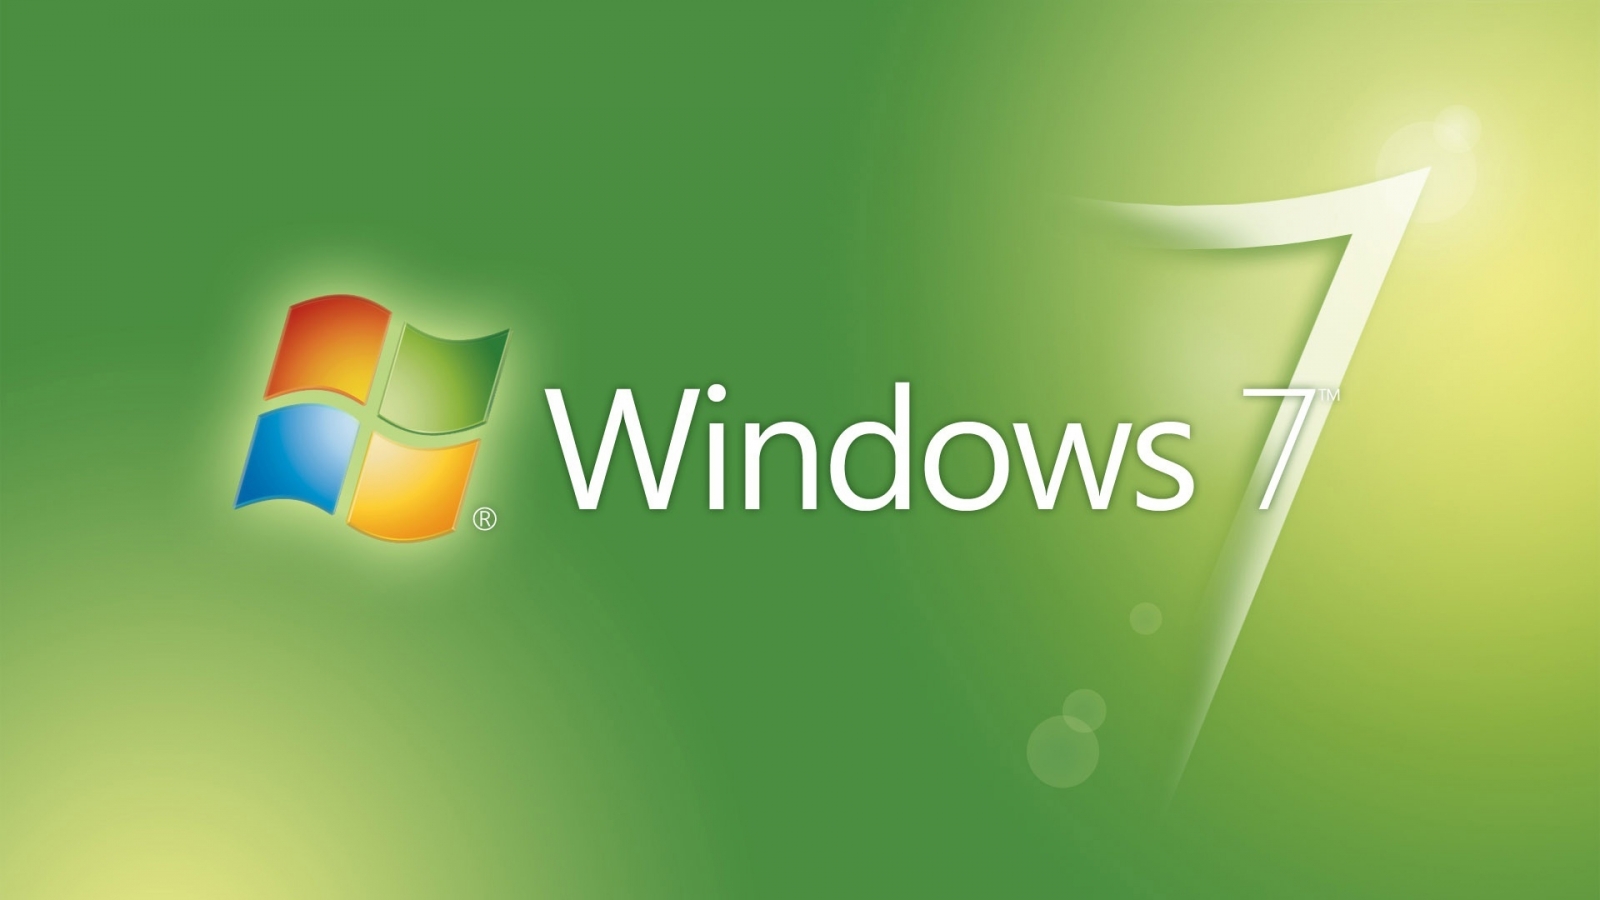 Windows 7 Green for 1600 x 900 HDTV resolution